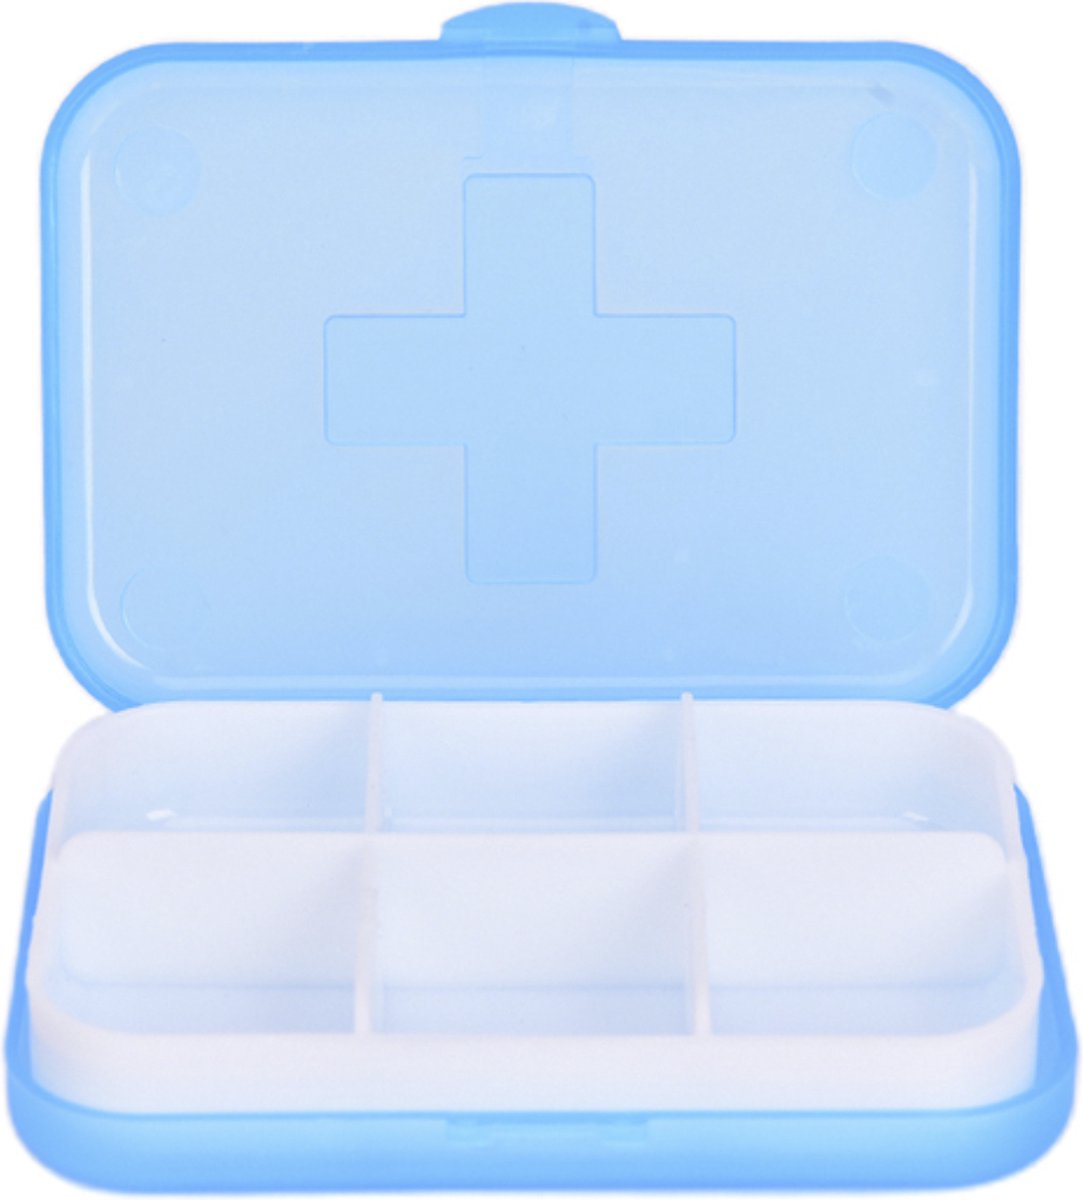 Cabantis Mini Pillendoosje 6 Vakjes - Mini-Pillen Organizer - Mini-Medicijn Doosje - 8,8x6,5x2cm -Lichtblauw